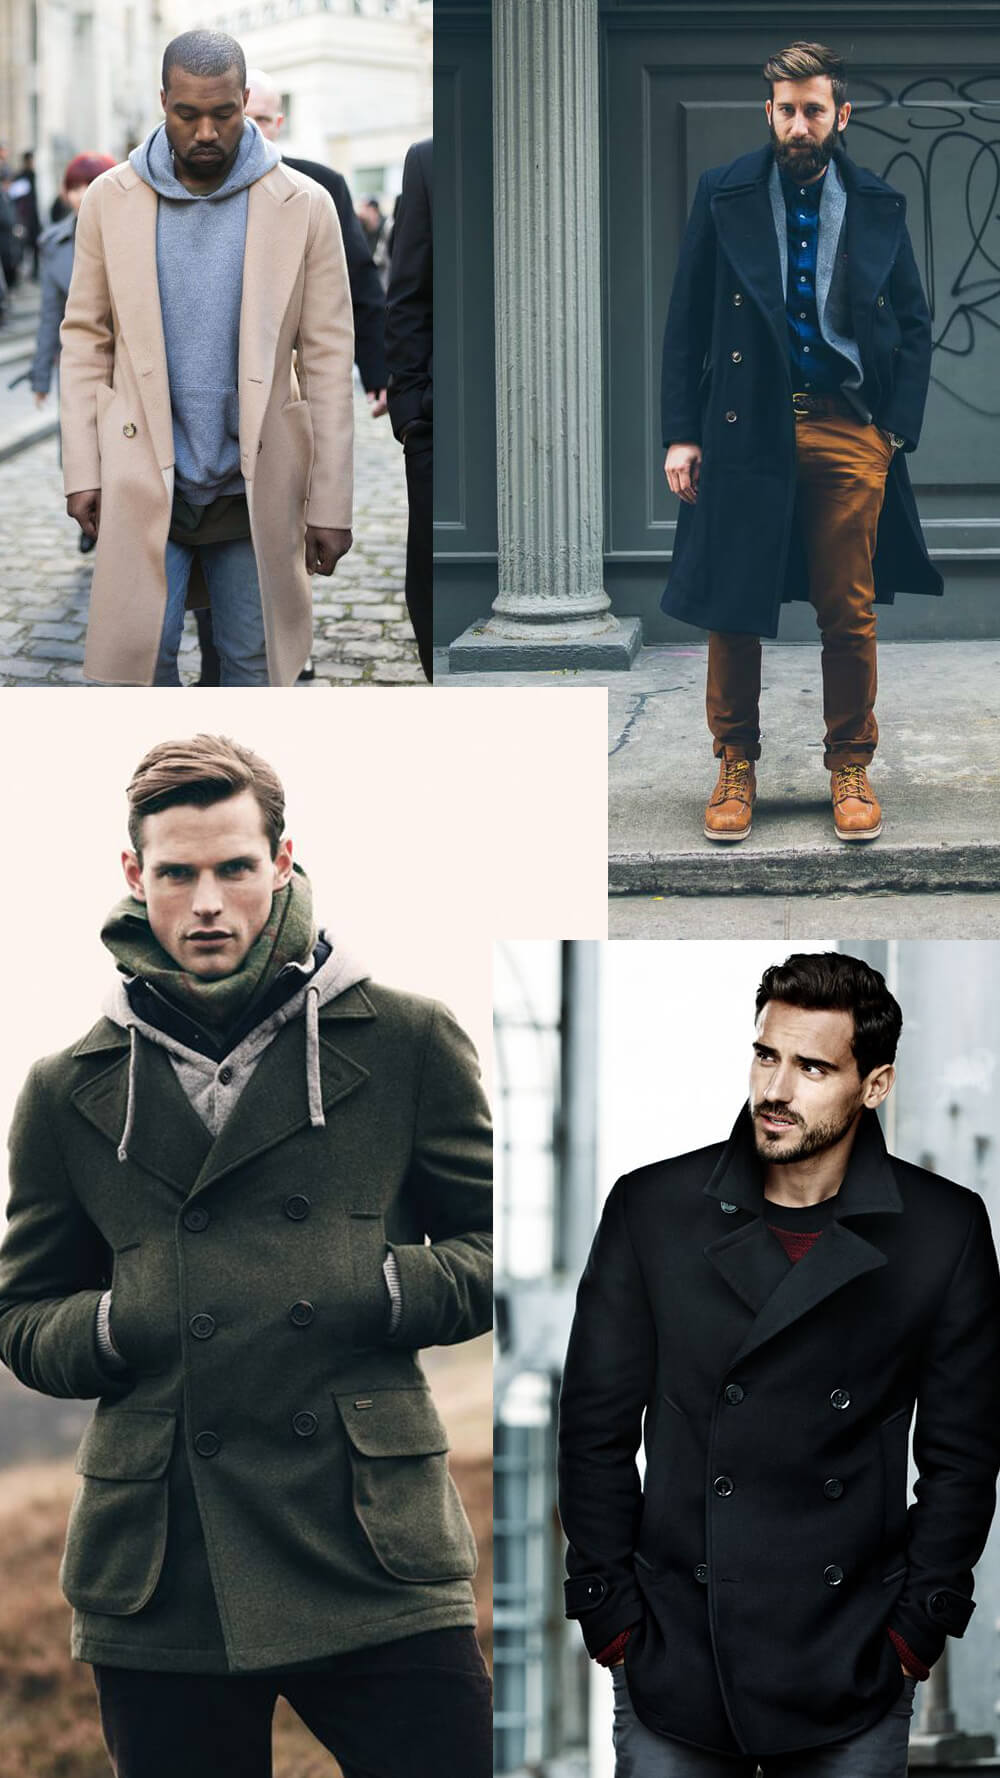 The Best Winter Coats in 2017 - Best Winter Jackets For Men